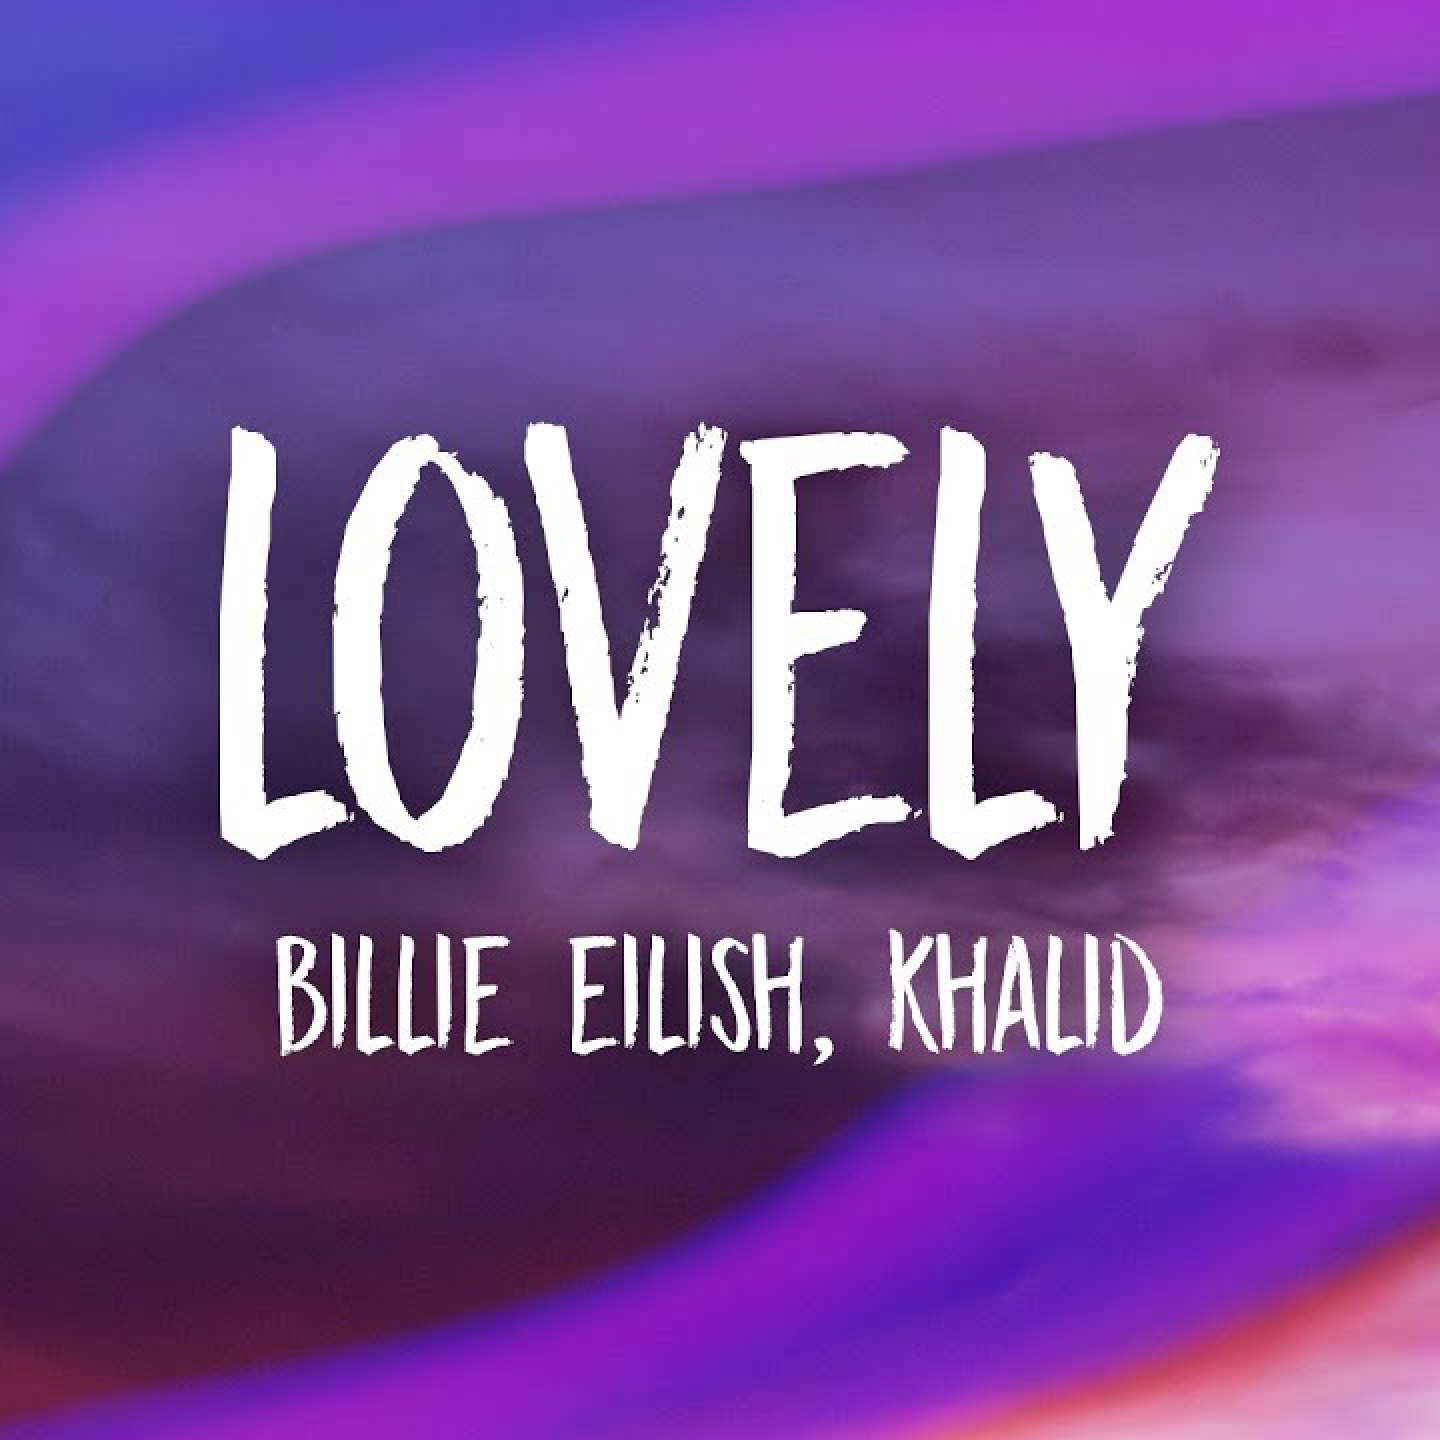 Lovely Billie. Lovely обложка Билли. Billie Eilish feat. Khalid - Lovely. Billie Eilish Khalid. Lovely песня слушать